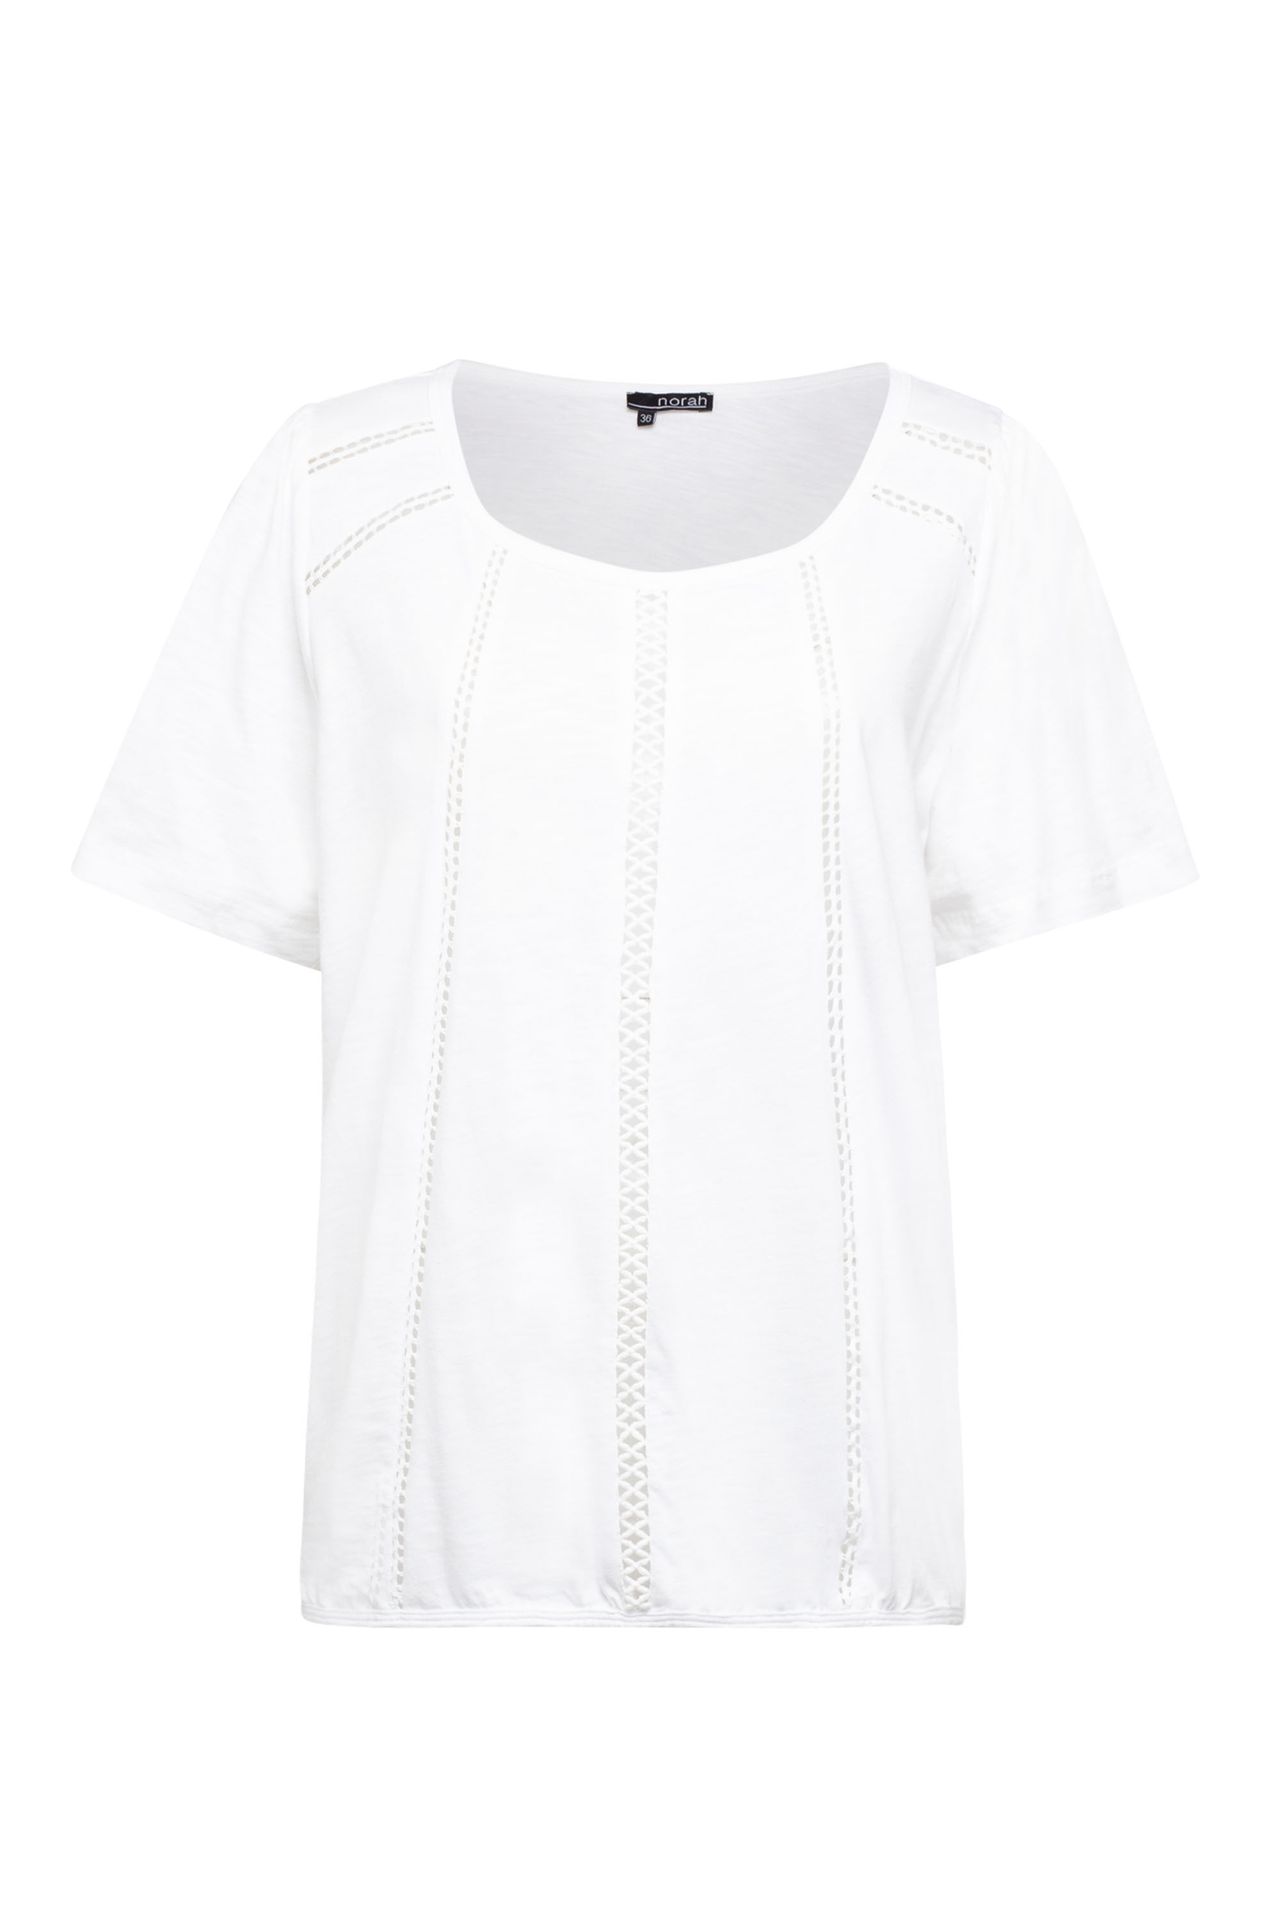  Shirt wit  white 212795-100